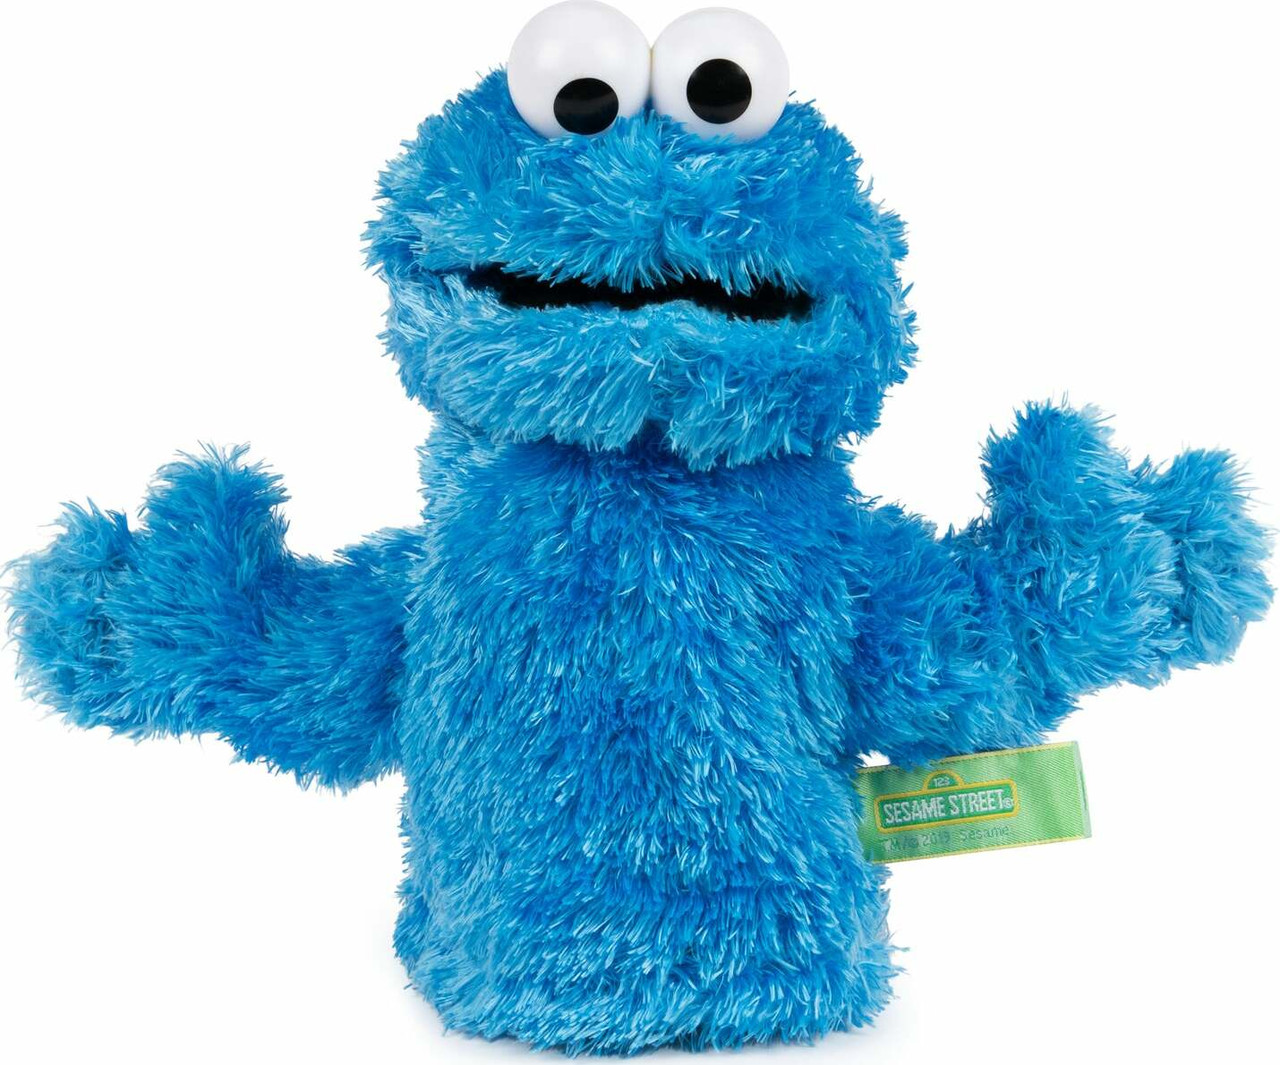 Sesame Street Cookie Monster Hand Puppet, 11 In 1